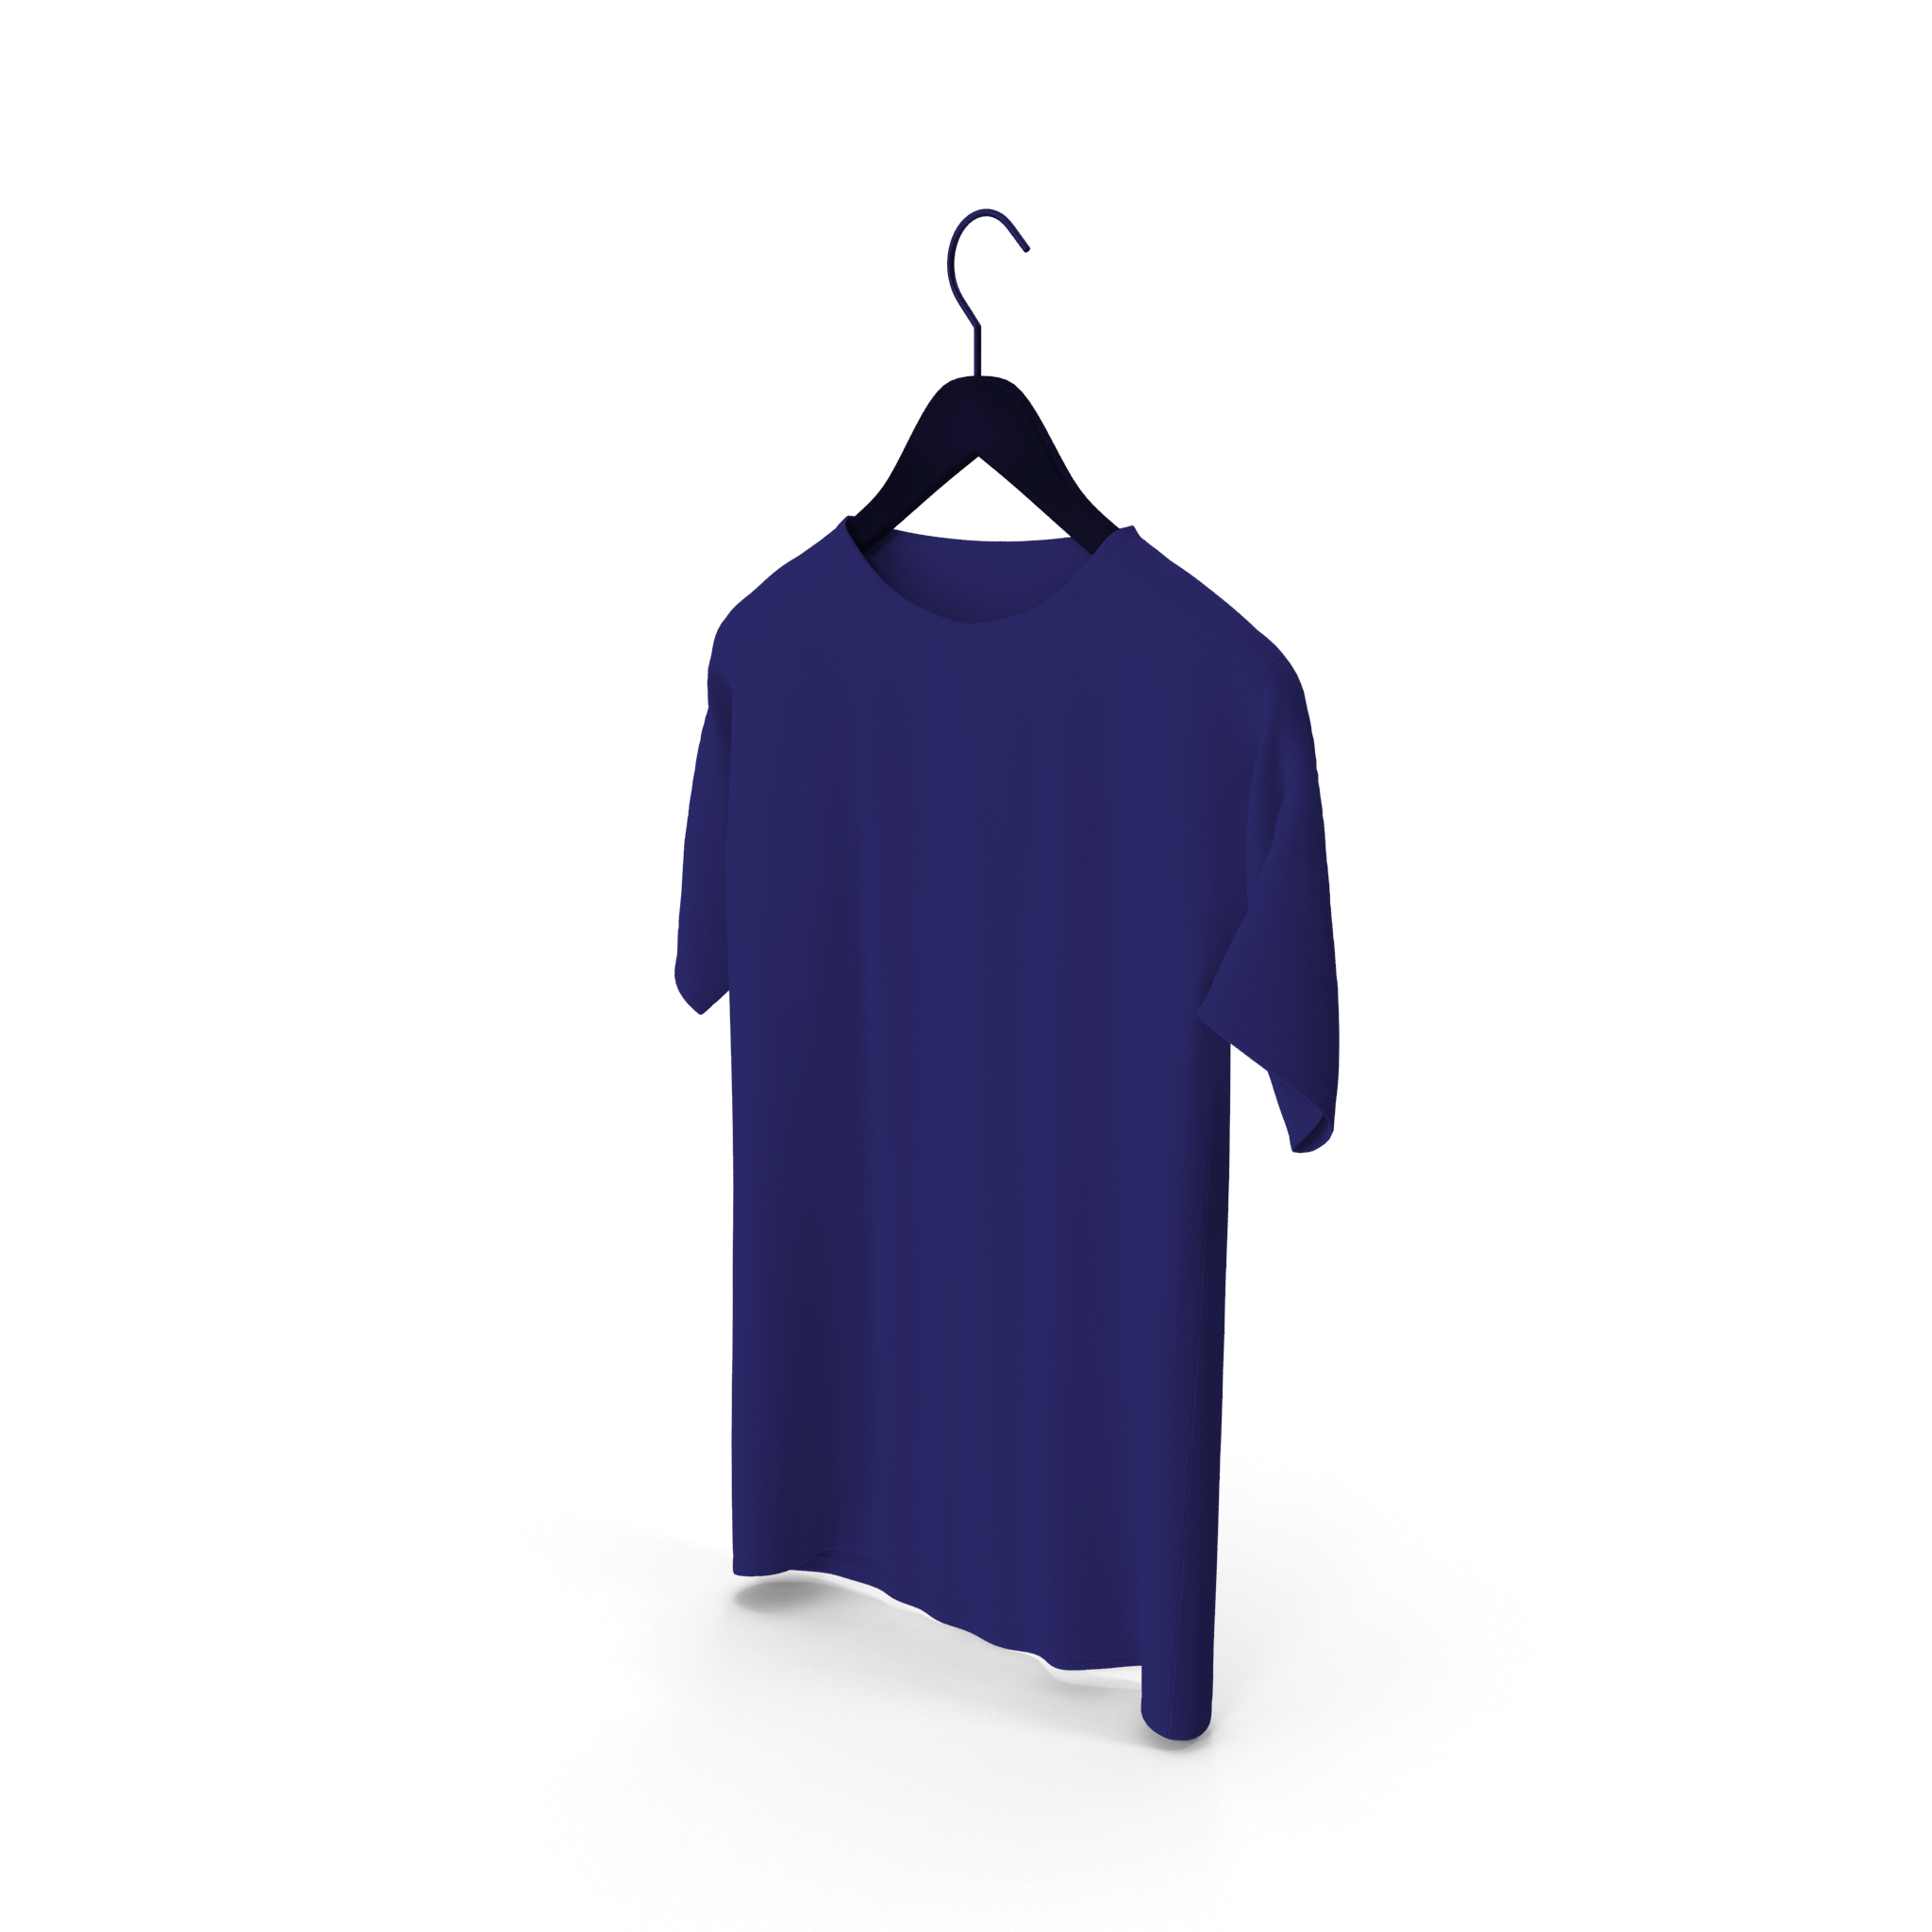 Camiseta-AzulMarinho